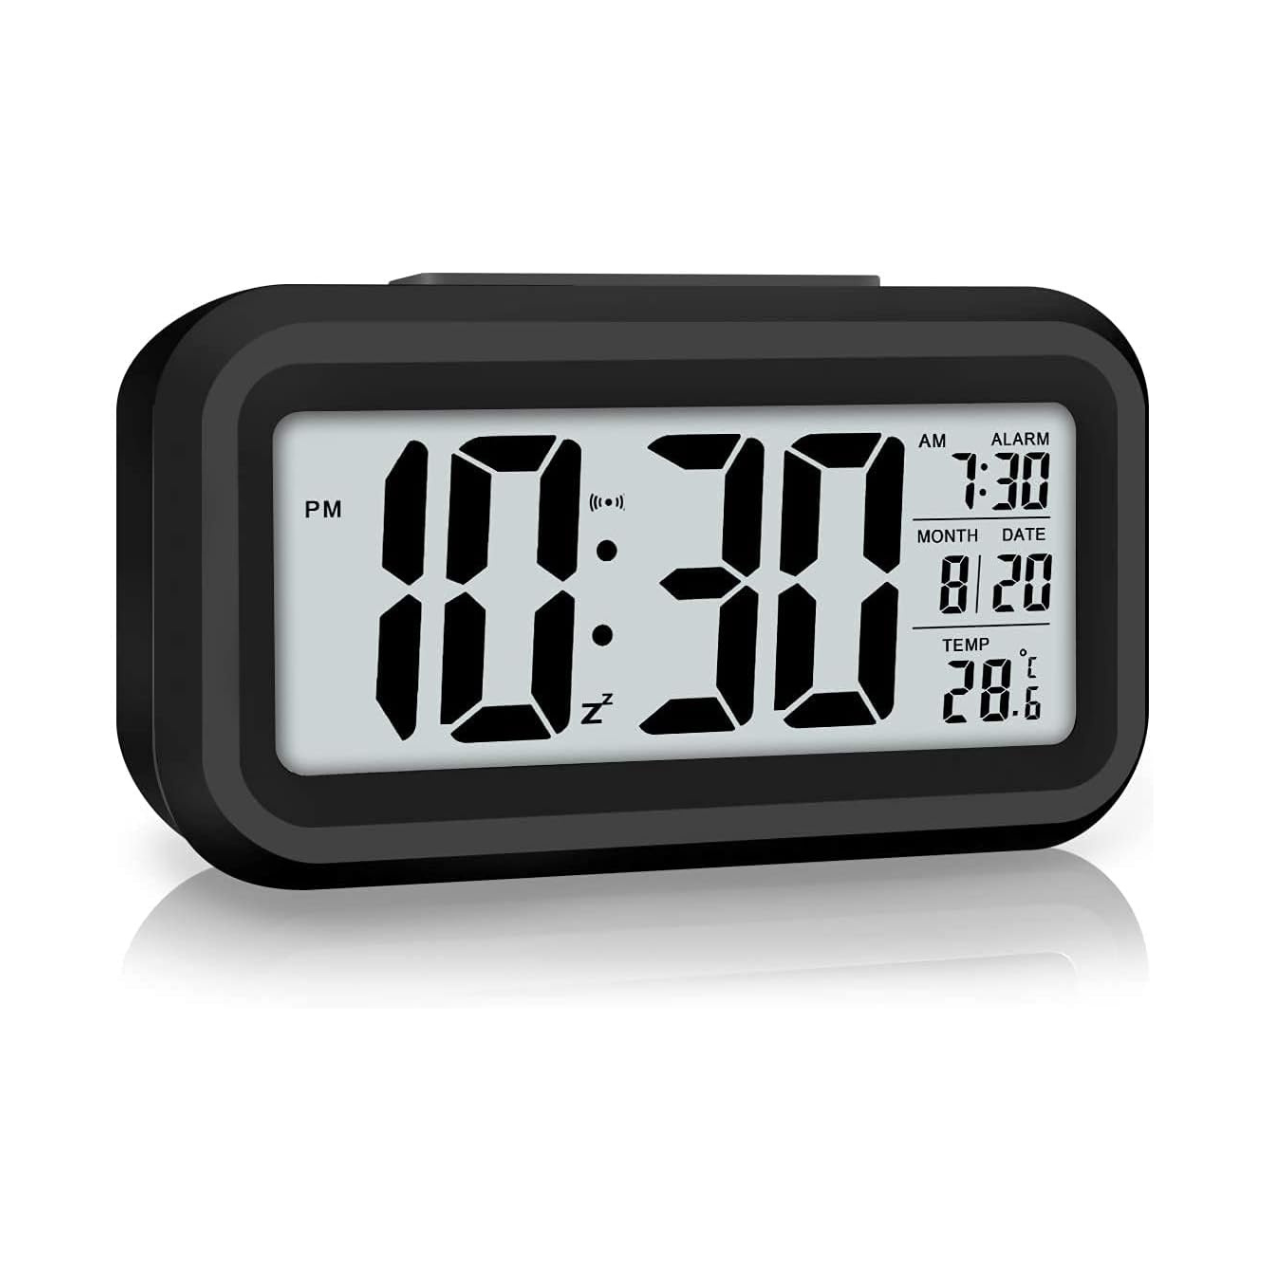 Large LED Display Digital Alarm Clock